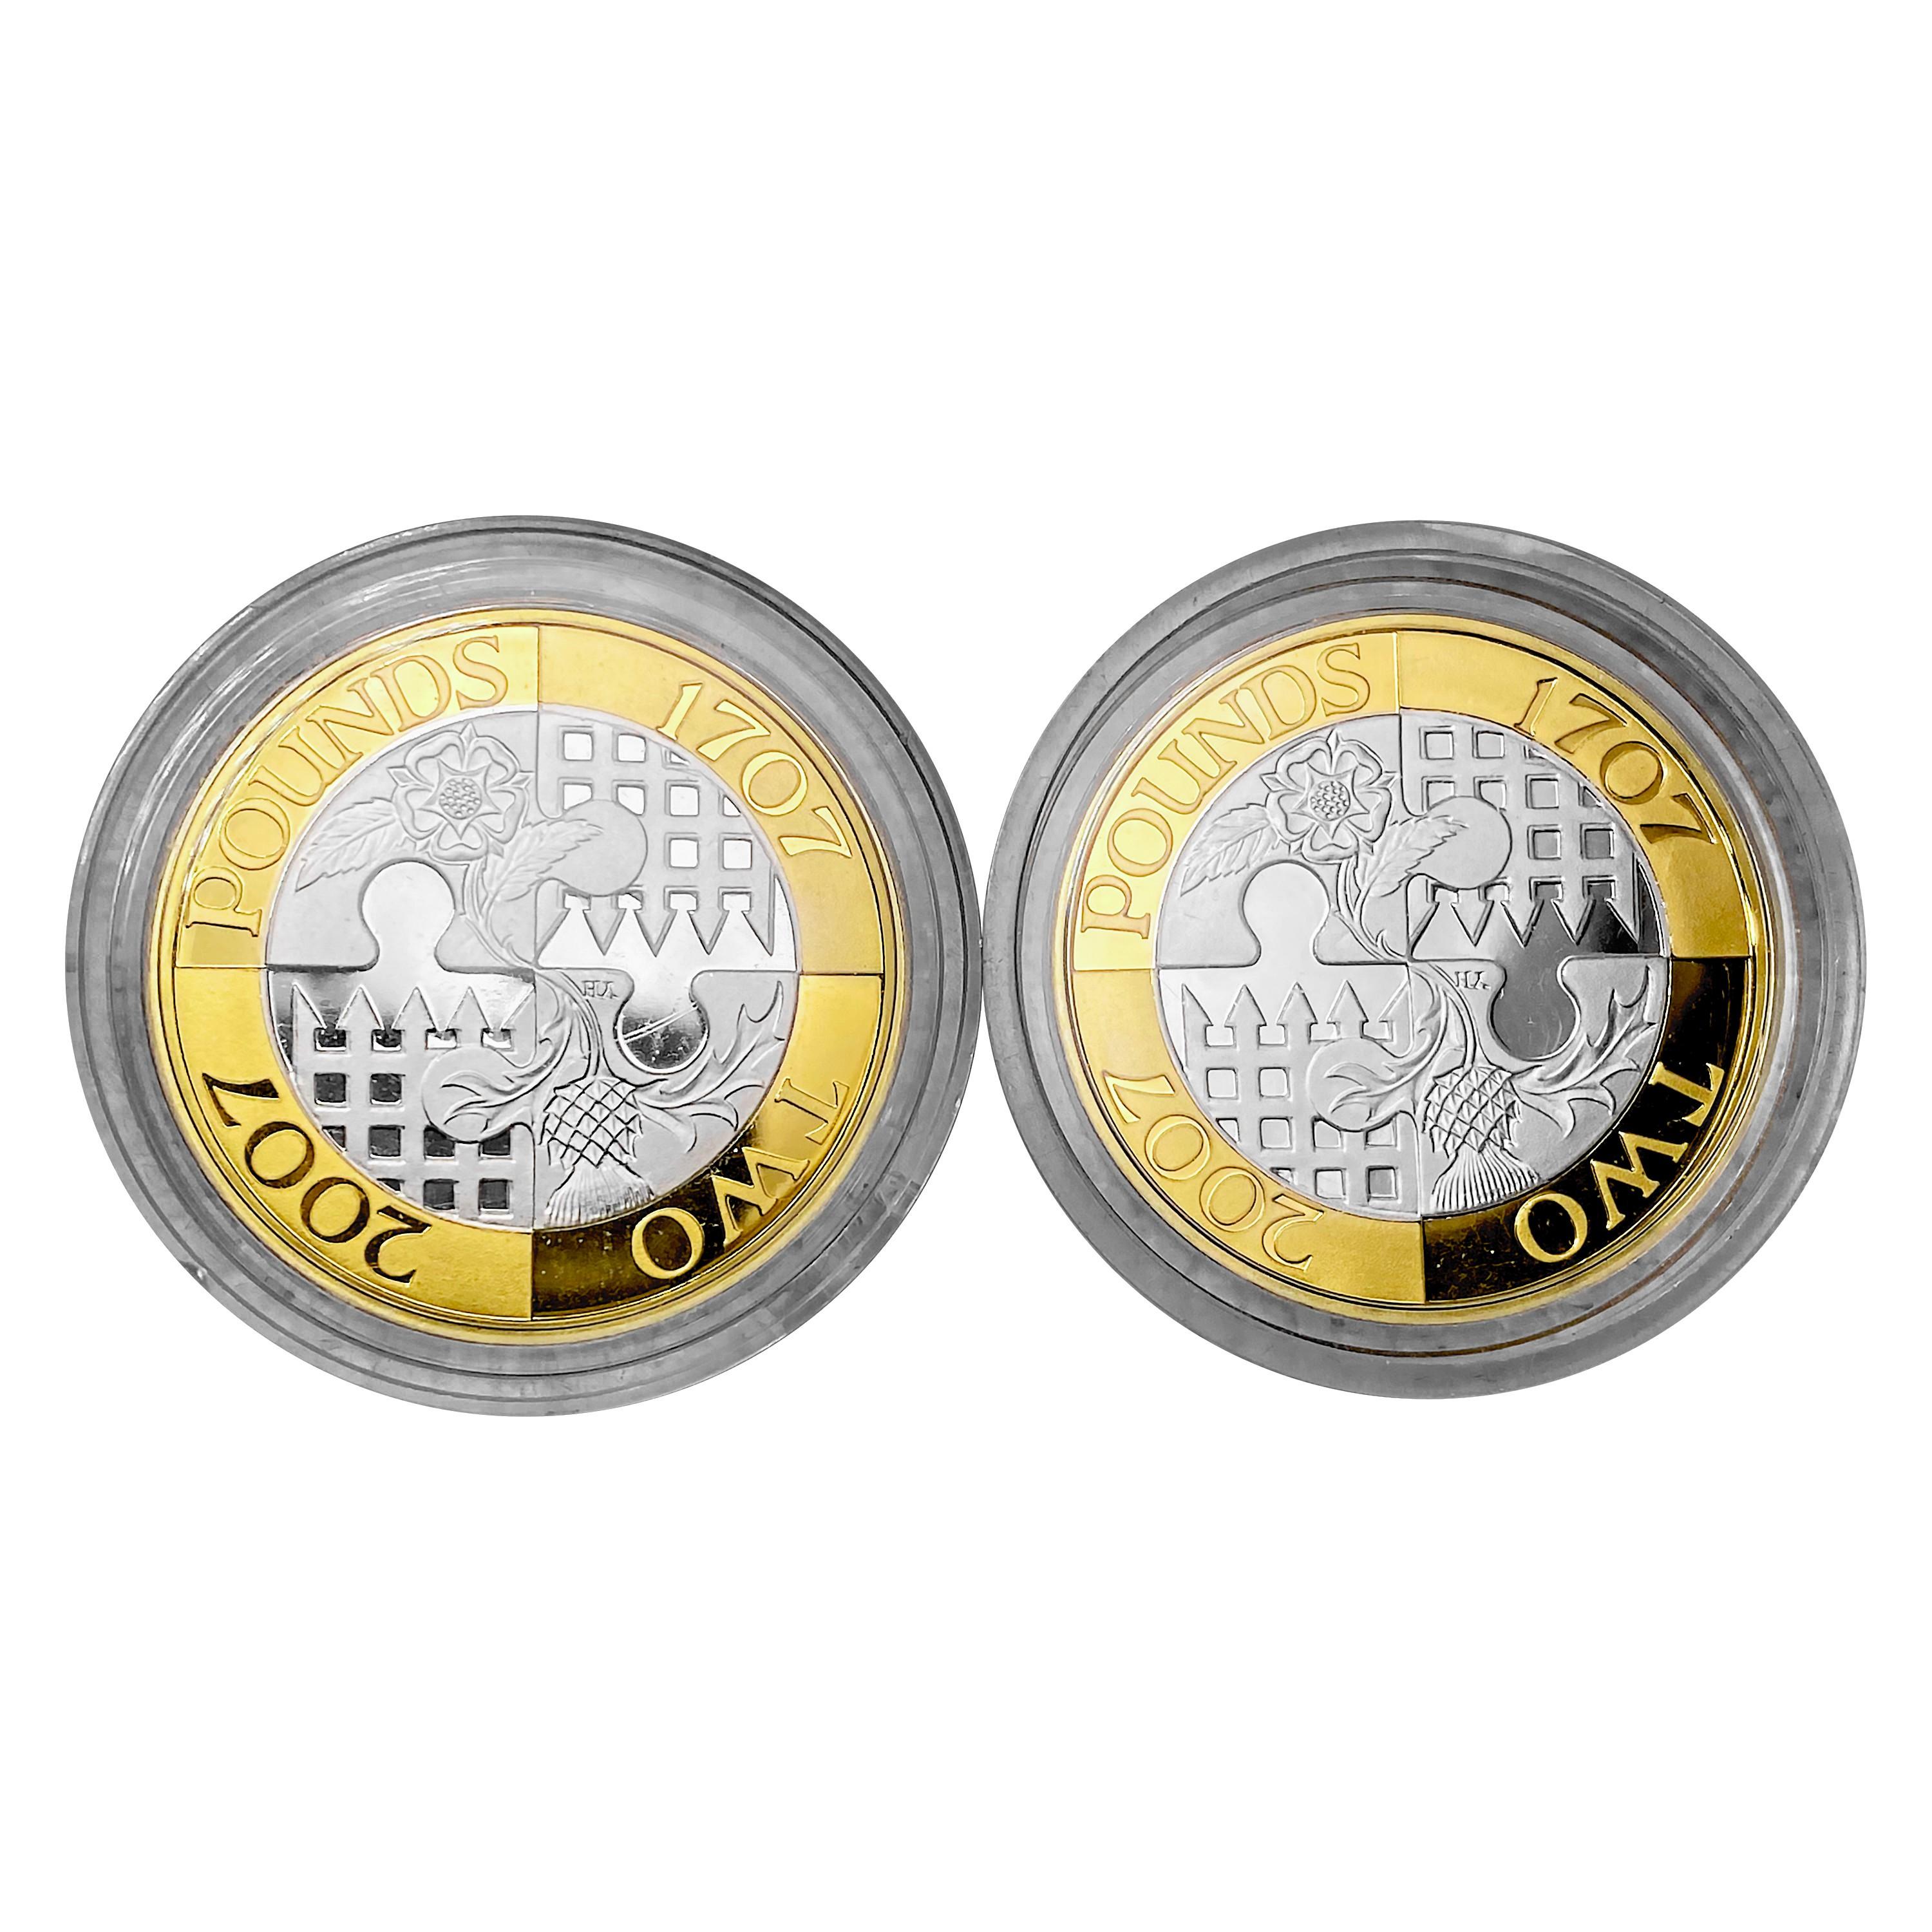 2007 Proof Great Britain 2lb Bi-Metallic Coins [2